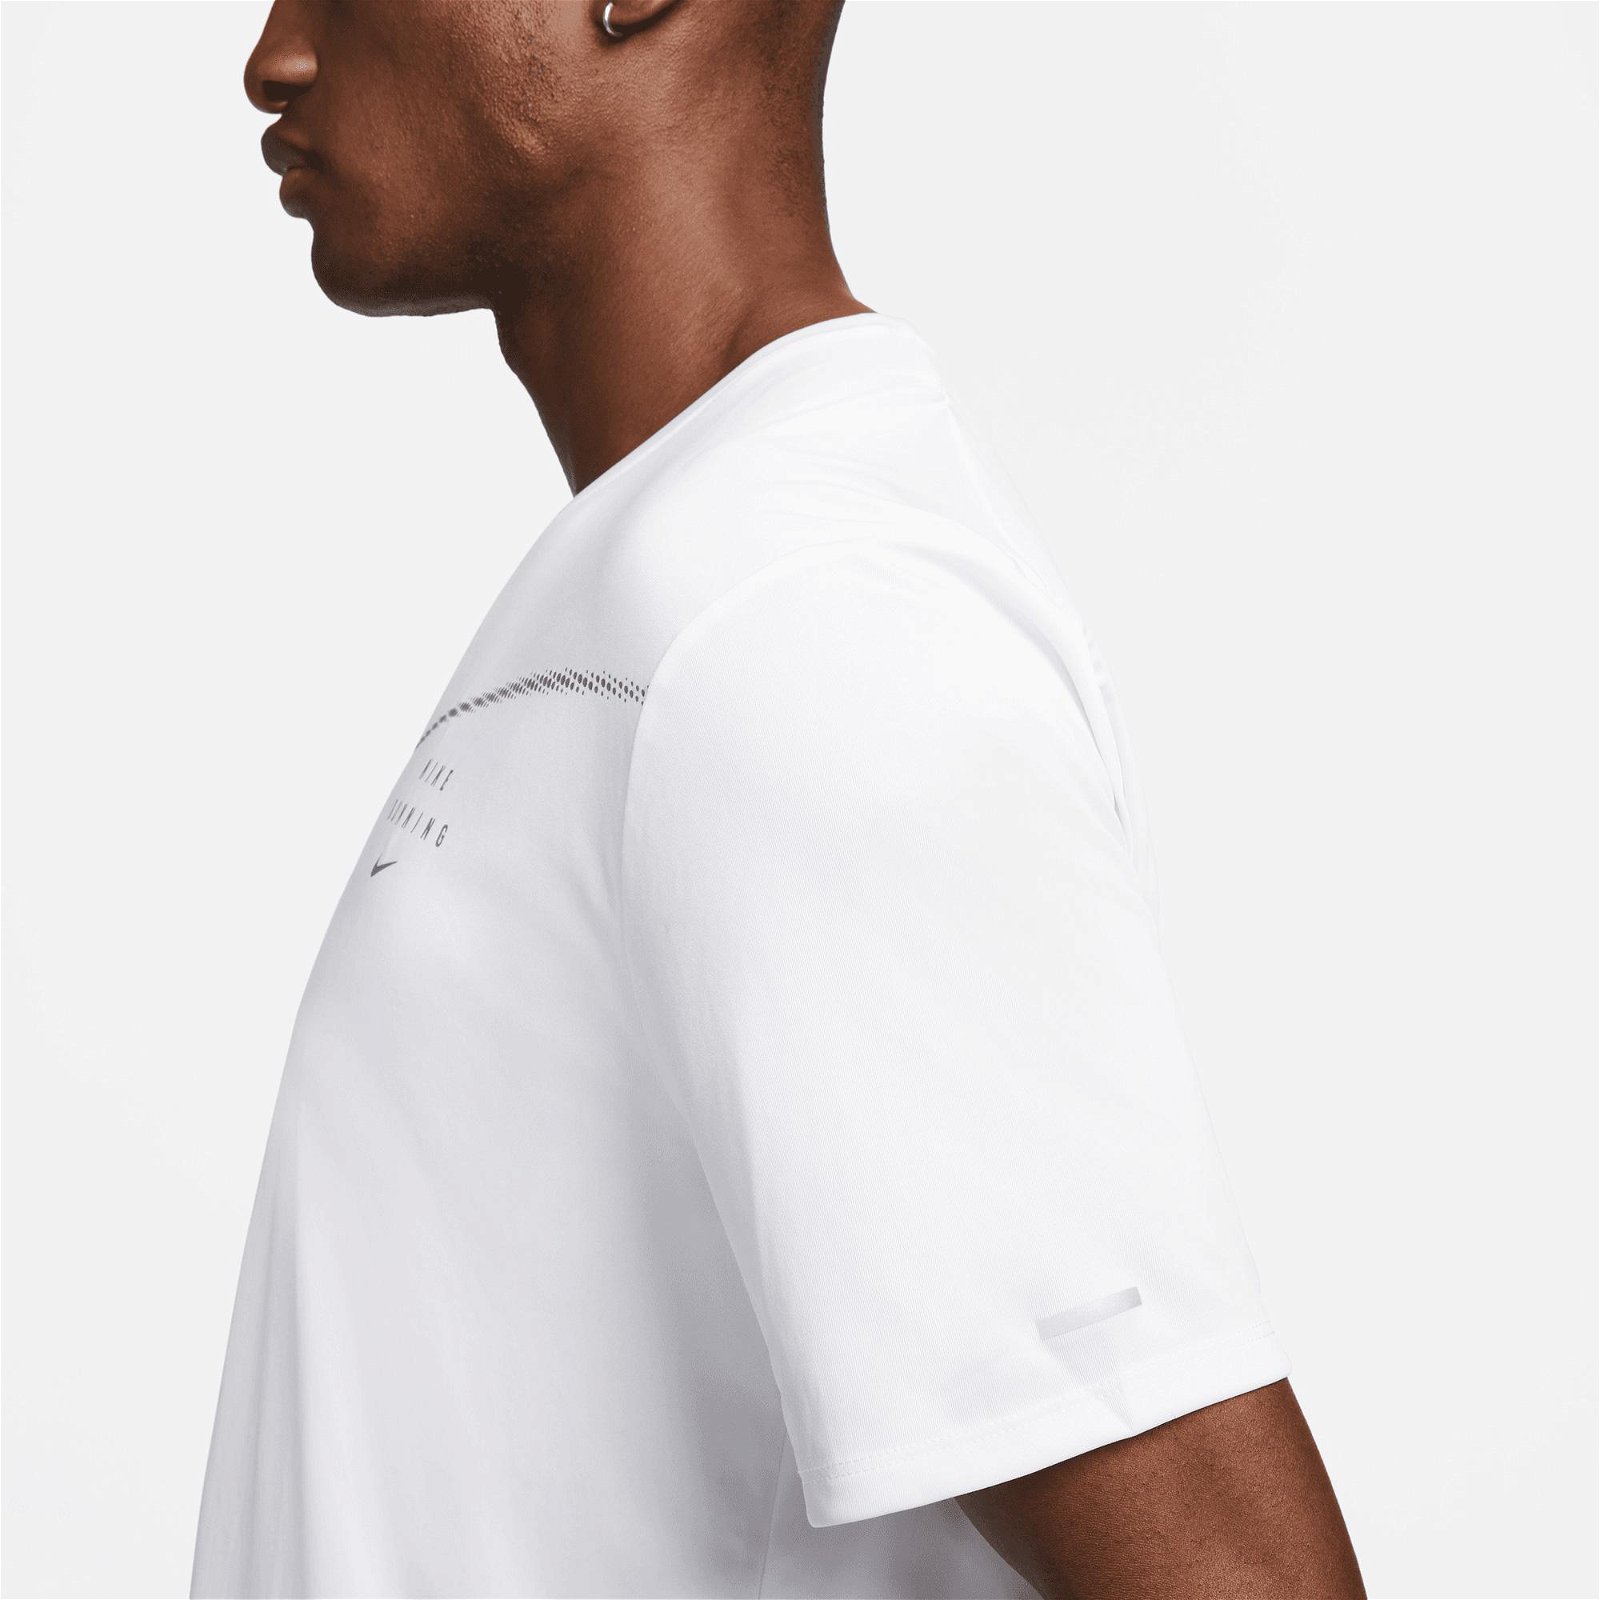 Nike Stone Run Division Miller Gx Erkek Beyaz T-Shirt